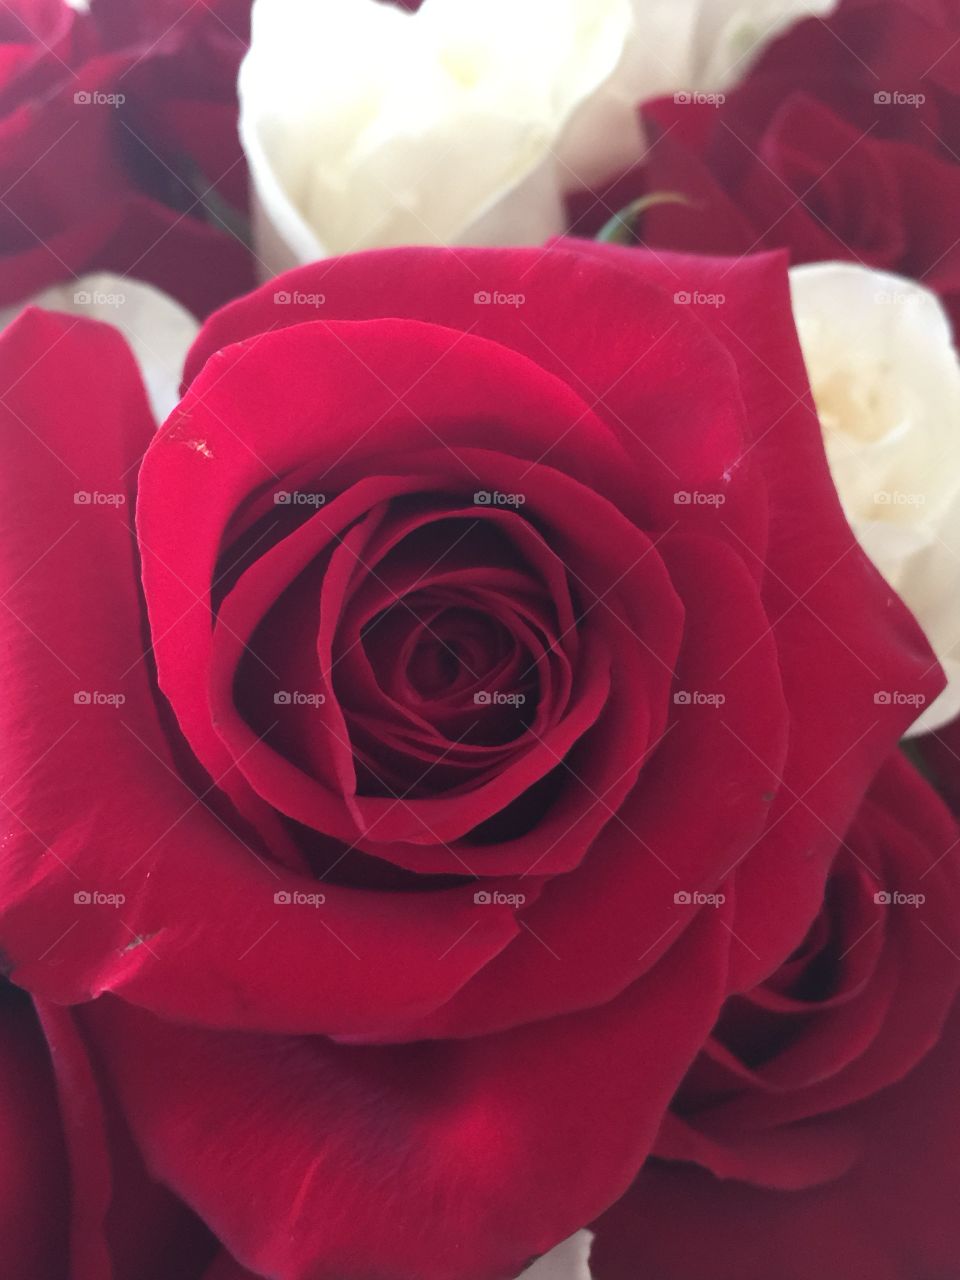 Rose. I love roses